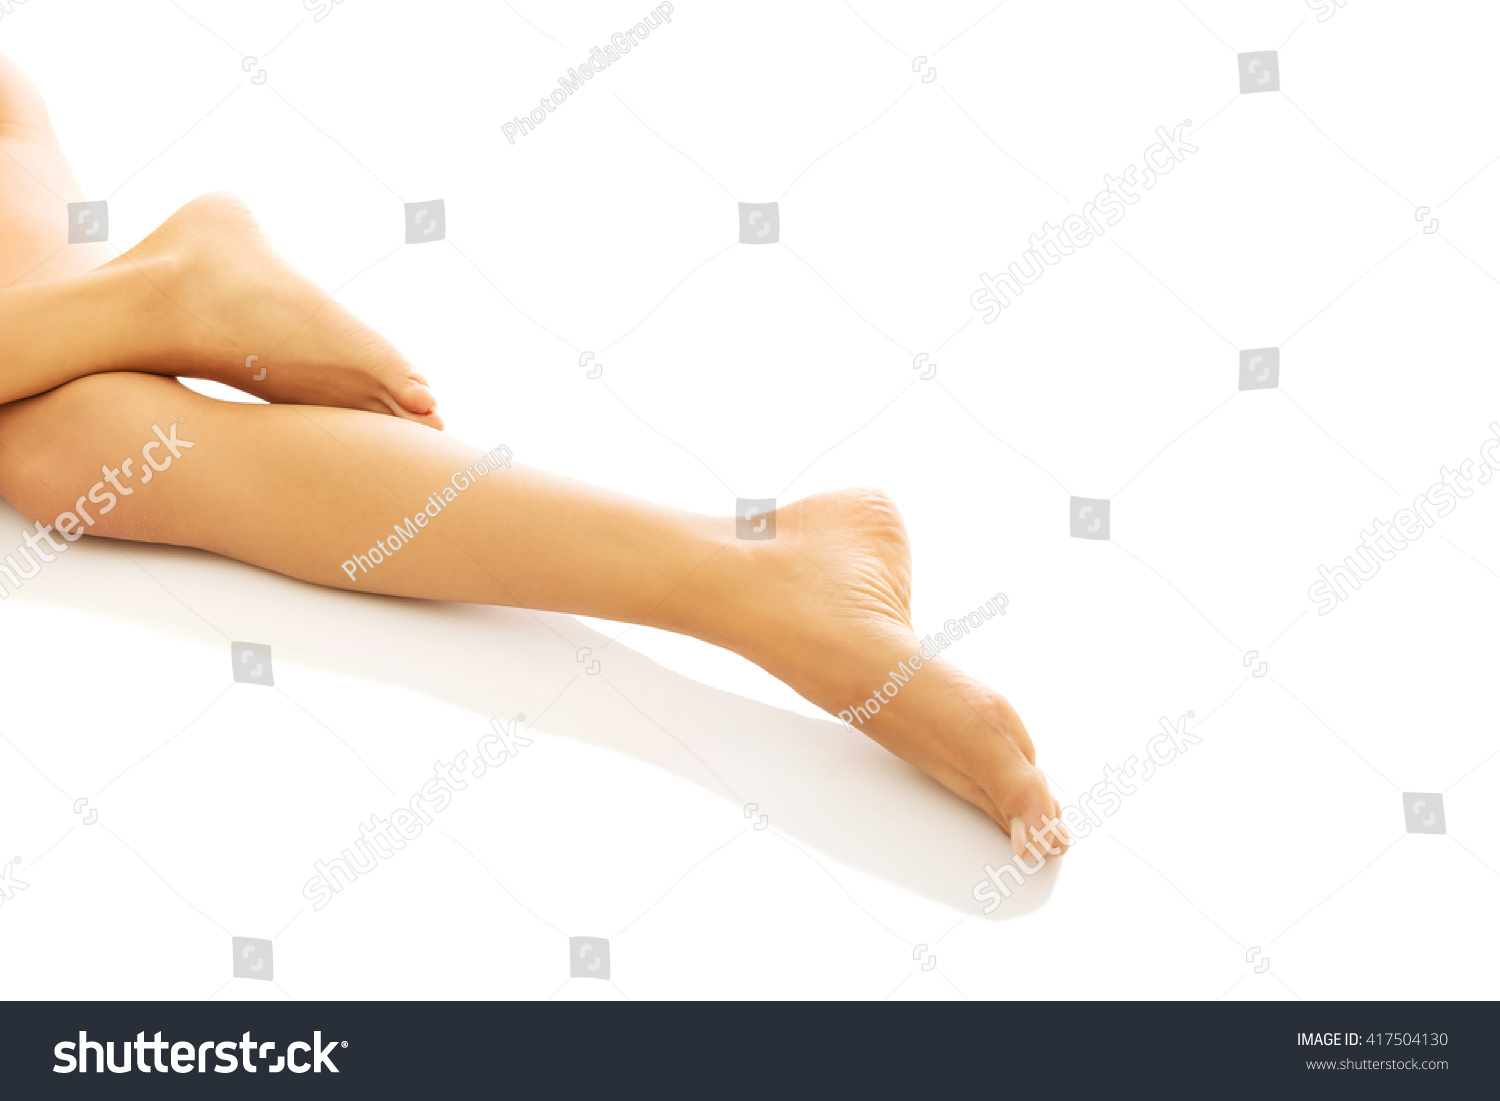 Womans Naked Crossed Legs Lying Stock Photo 417504130 Shutterstock